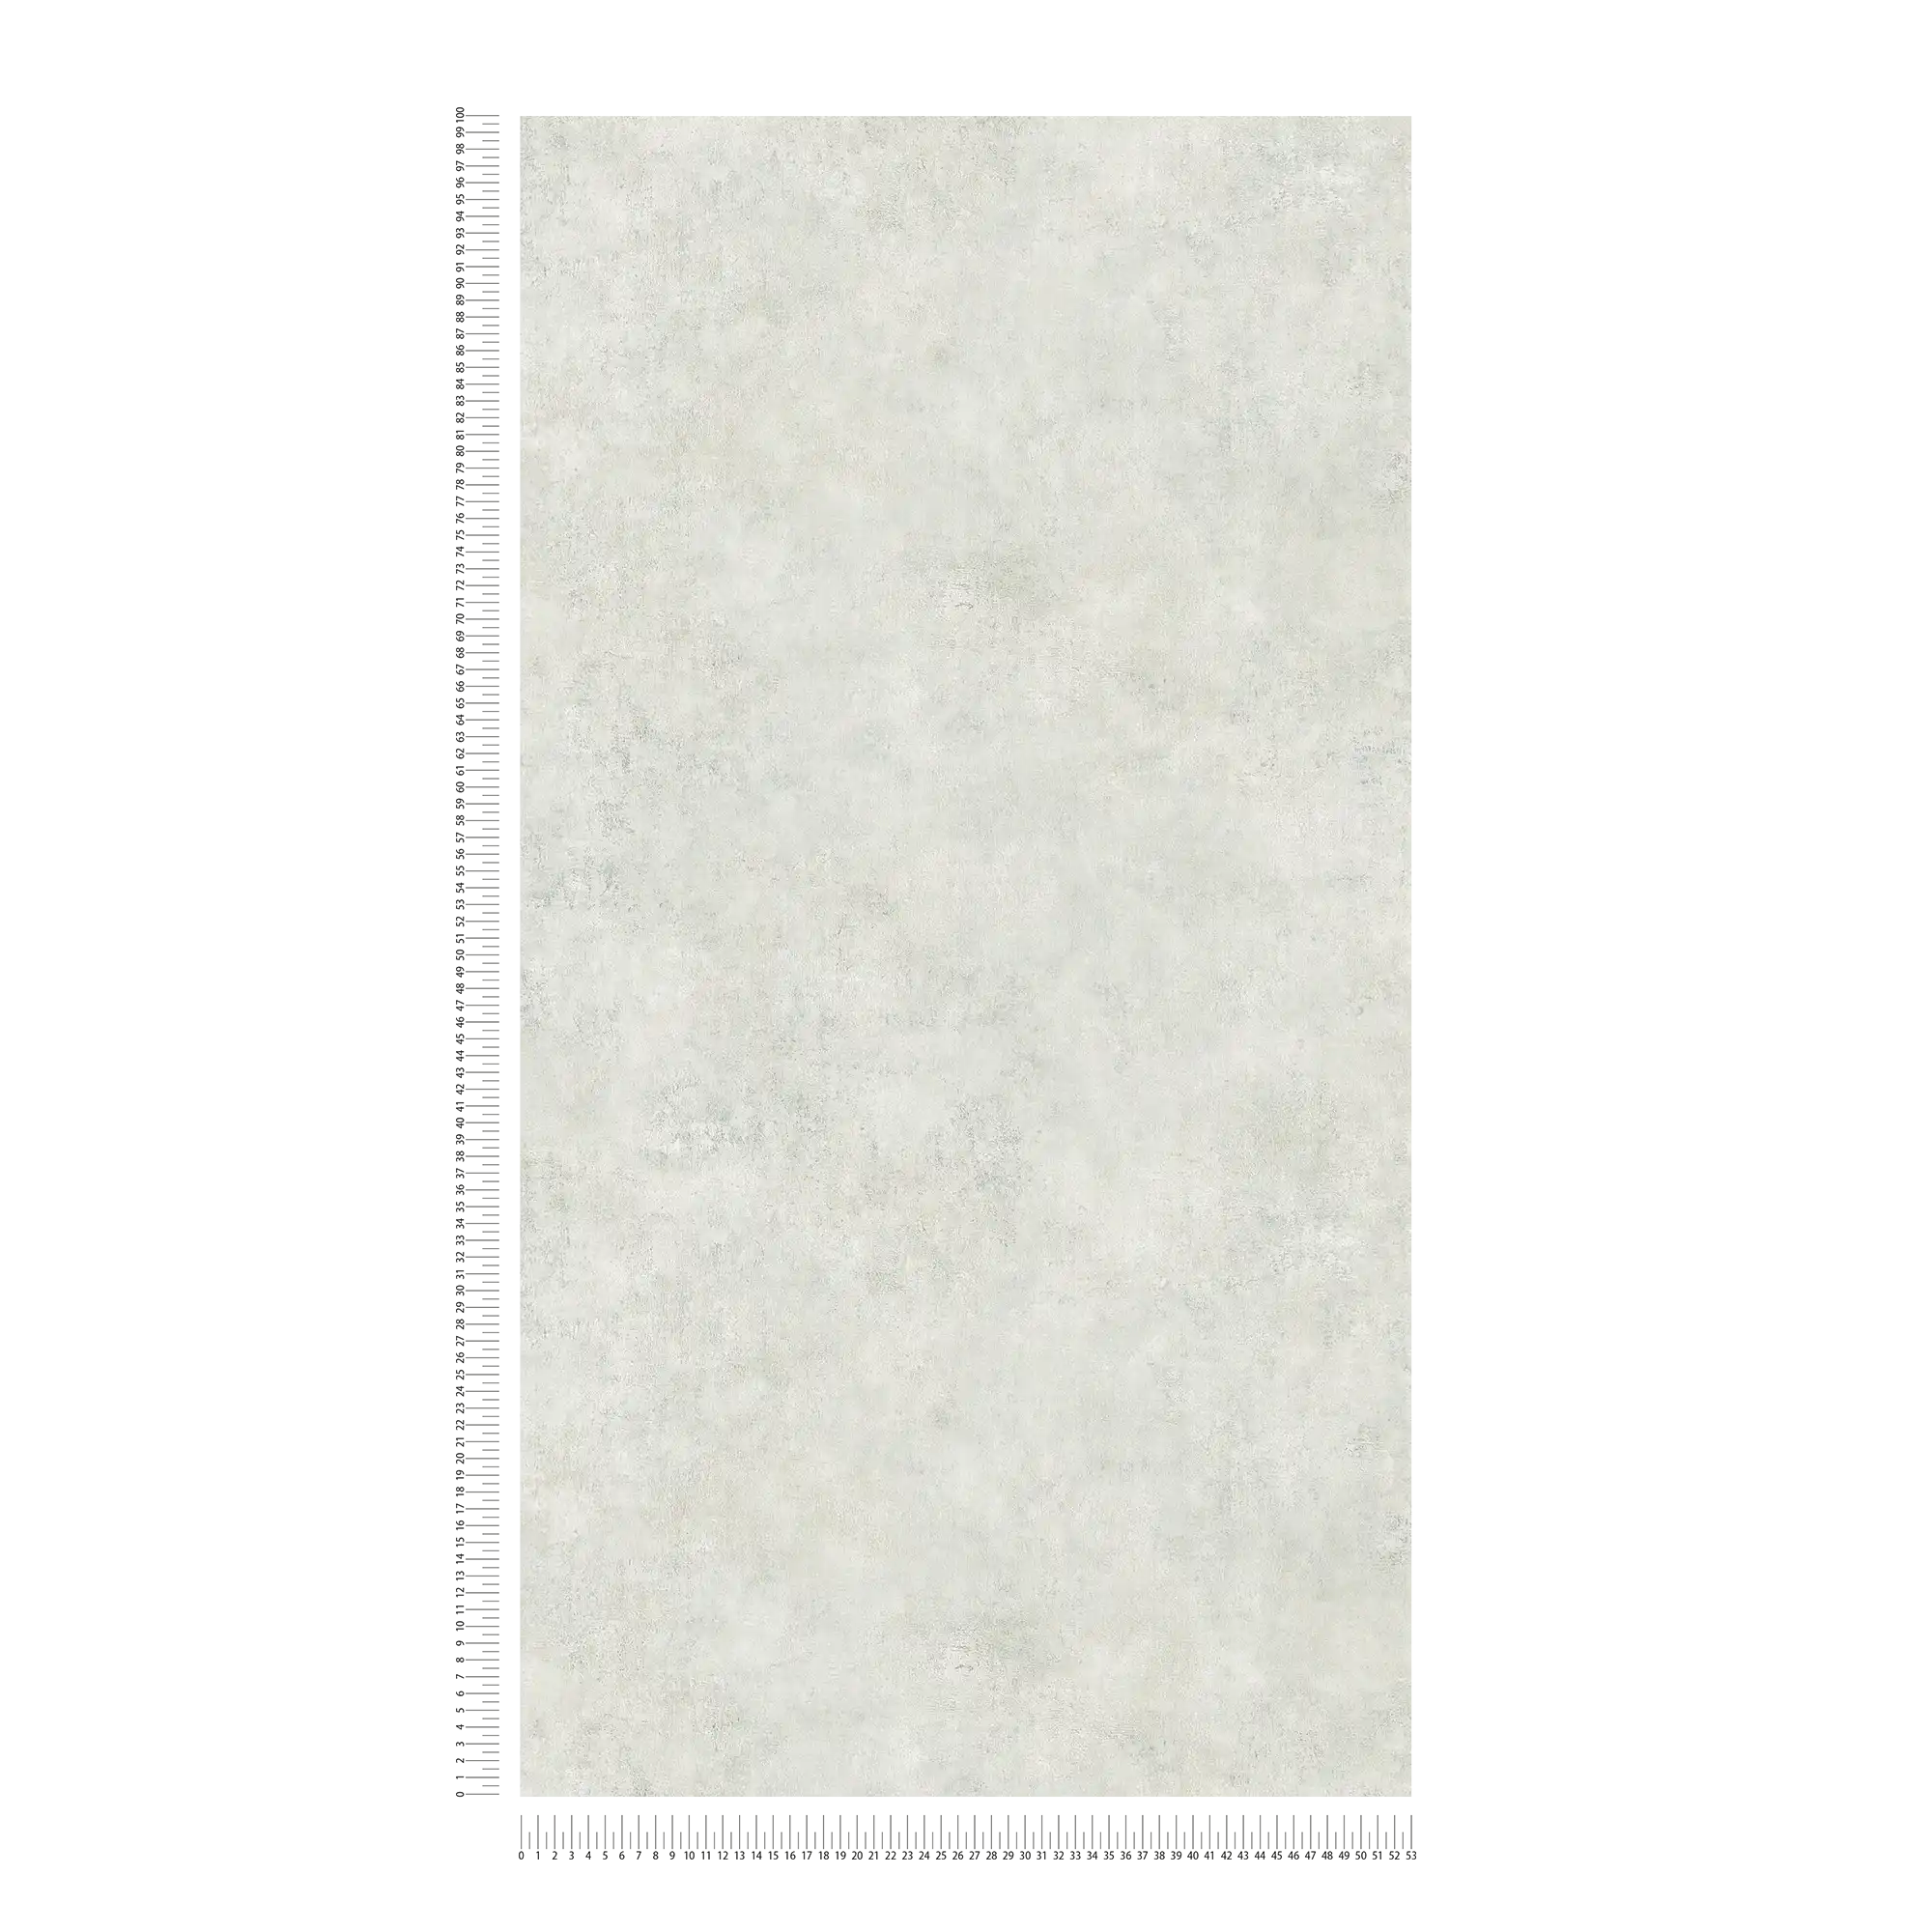             Self-adhesive wallpaper | concrete look in industrial style - grey
        